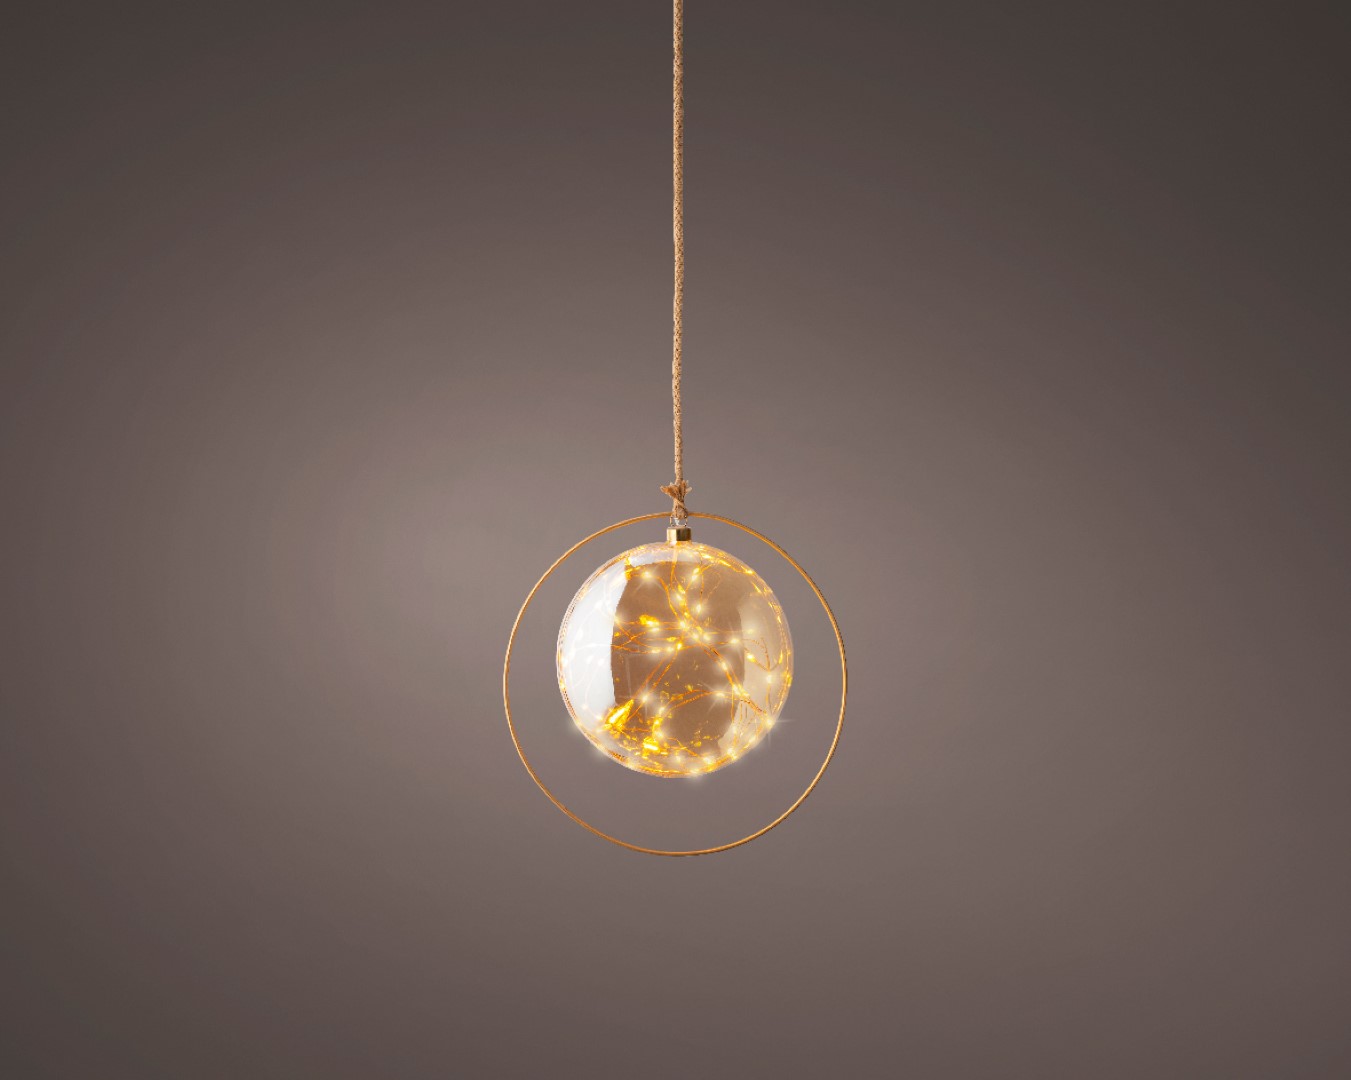 Kerstbal met jute touw en koperen ring - 40 LED lampjes - 26cm - Amber glas